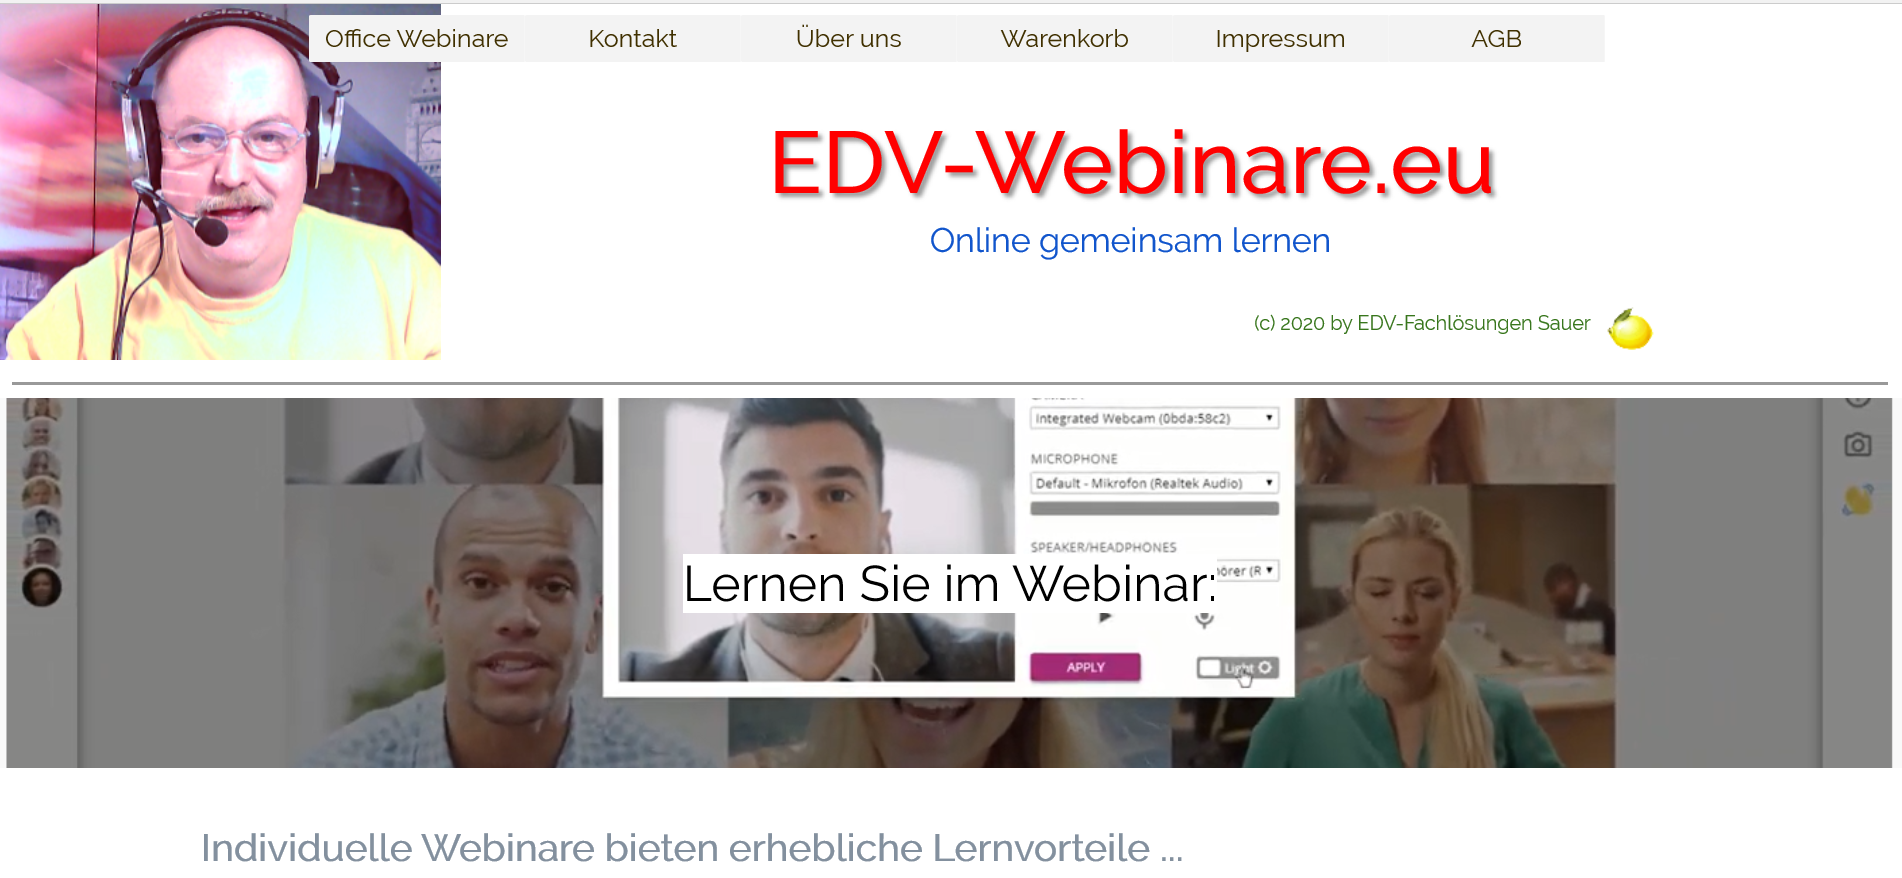 (c) Edv-webinare.eu